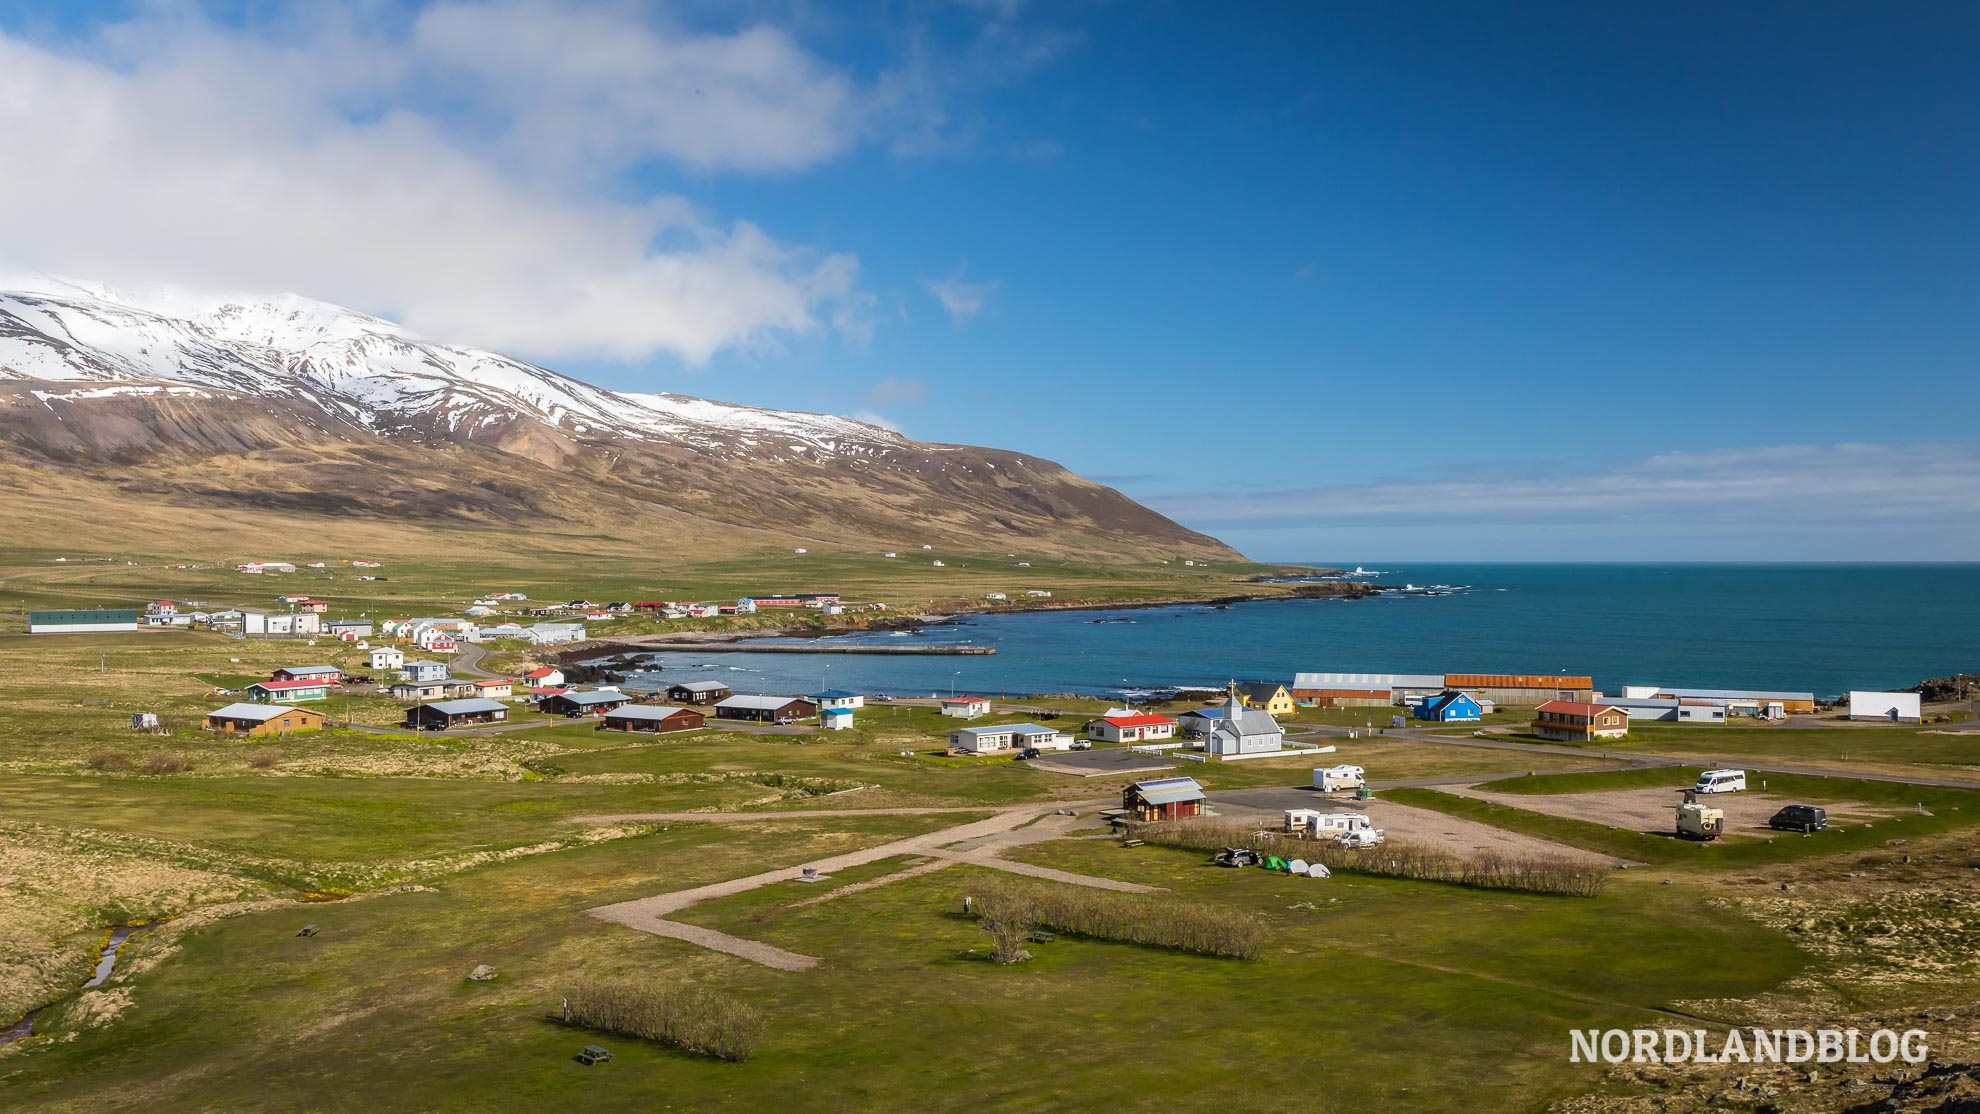 Dorf Borgarfjörður mit Campingplatz in Island (Nordlandblog)